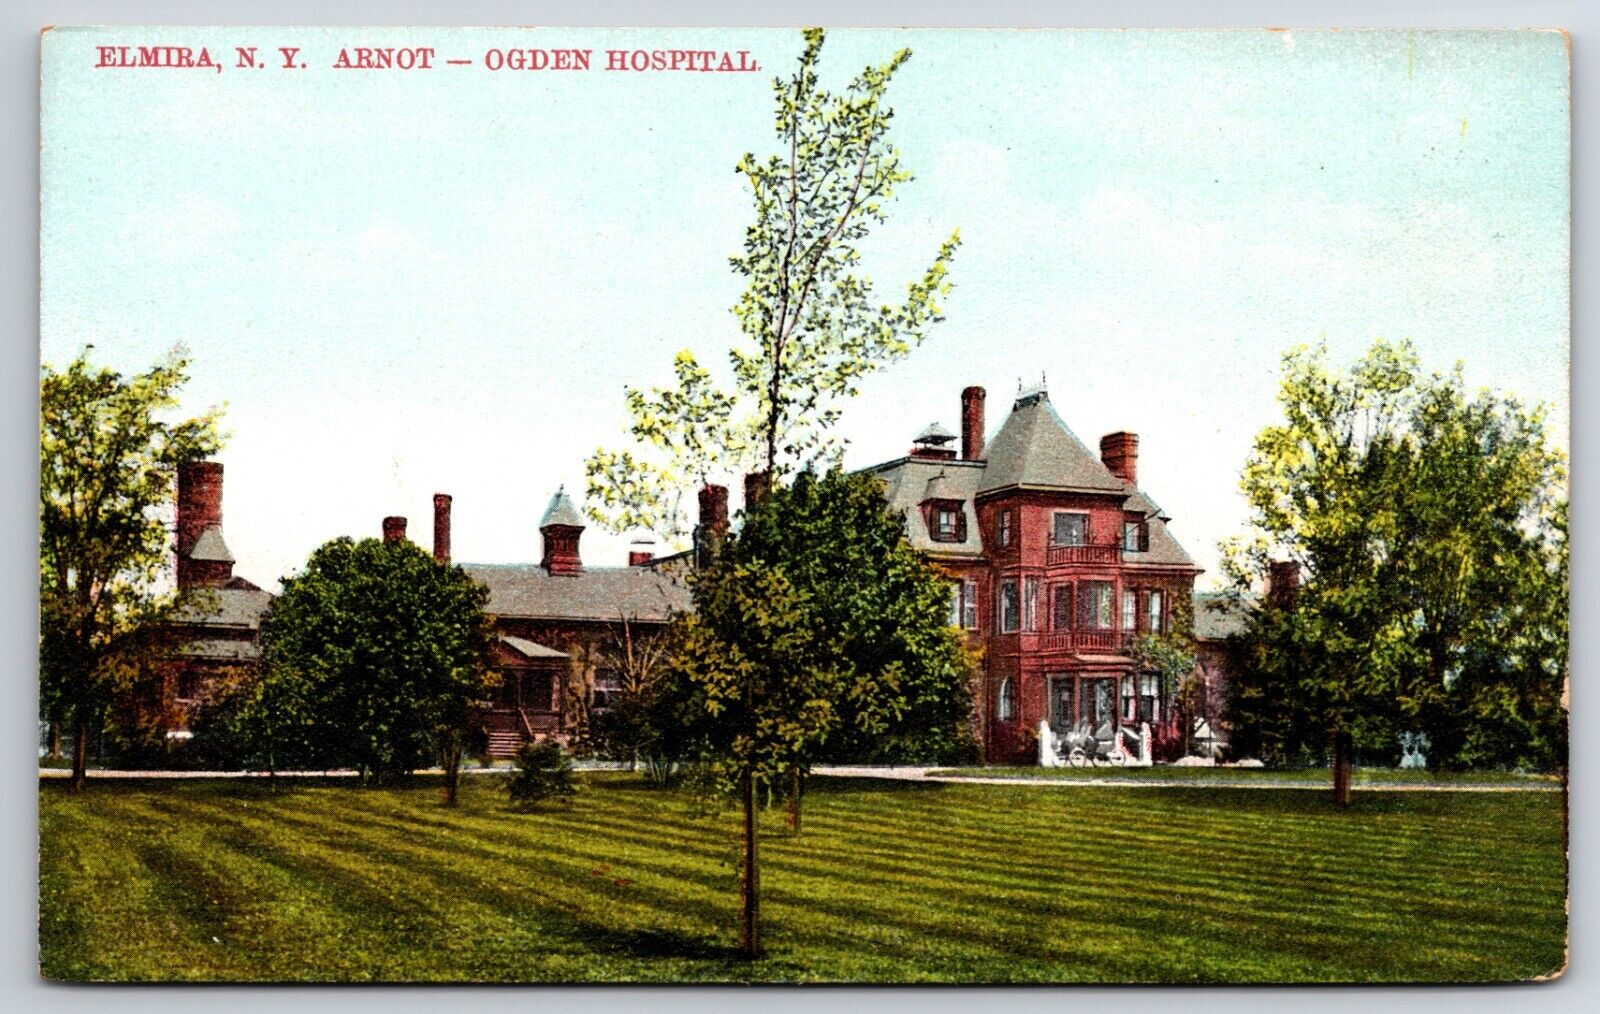 Ogden Hospital Elmira New York NY Arnot c1911 Vtg C.S. Woolworth & Co Postcard